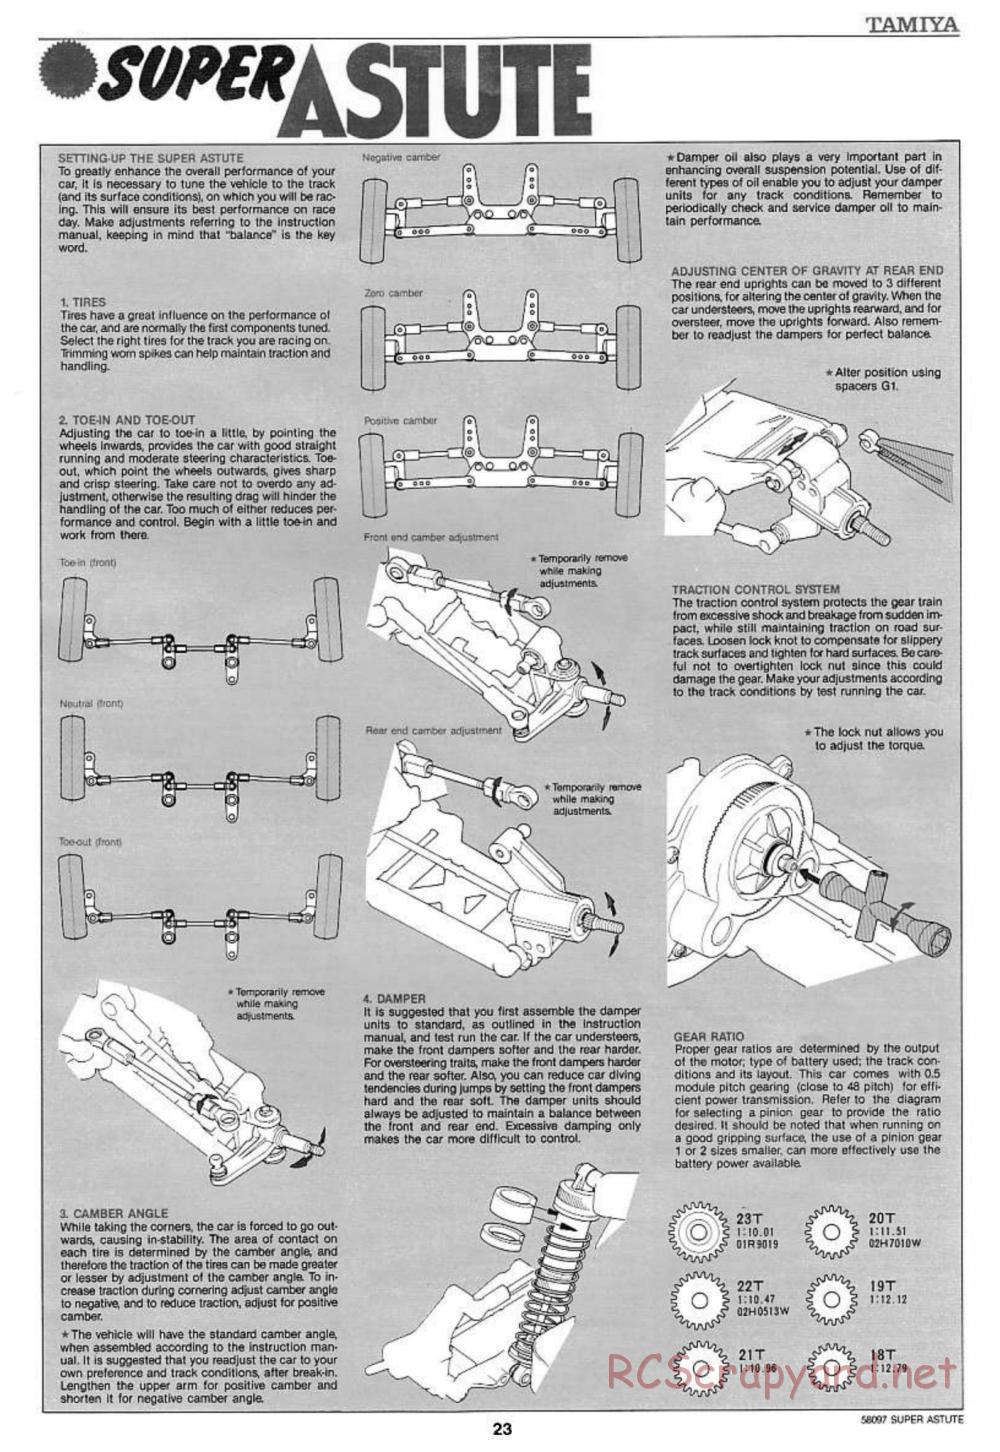 Tamiya - Super Astute - 58097 - Manual - Page 23